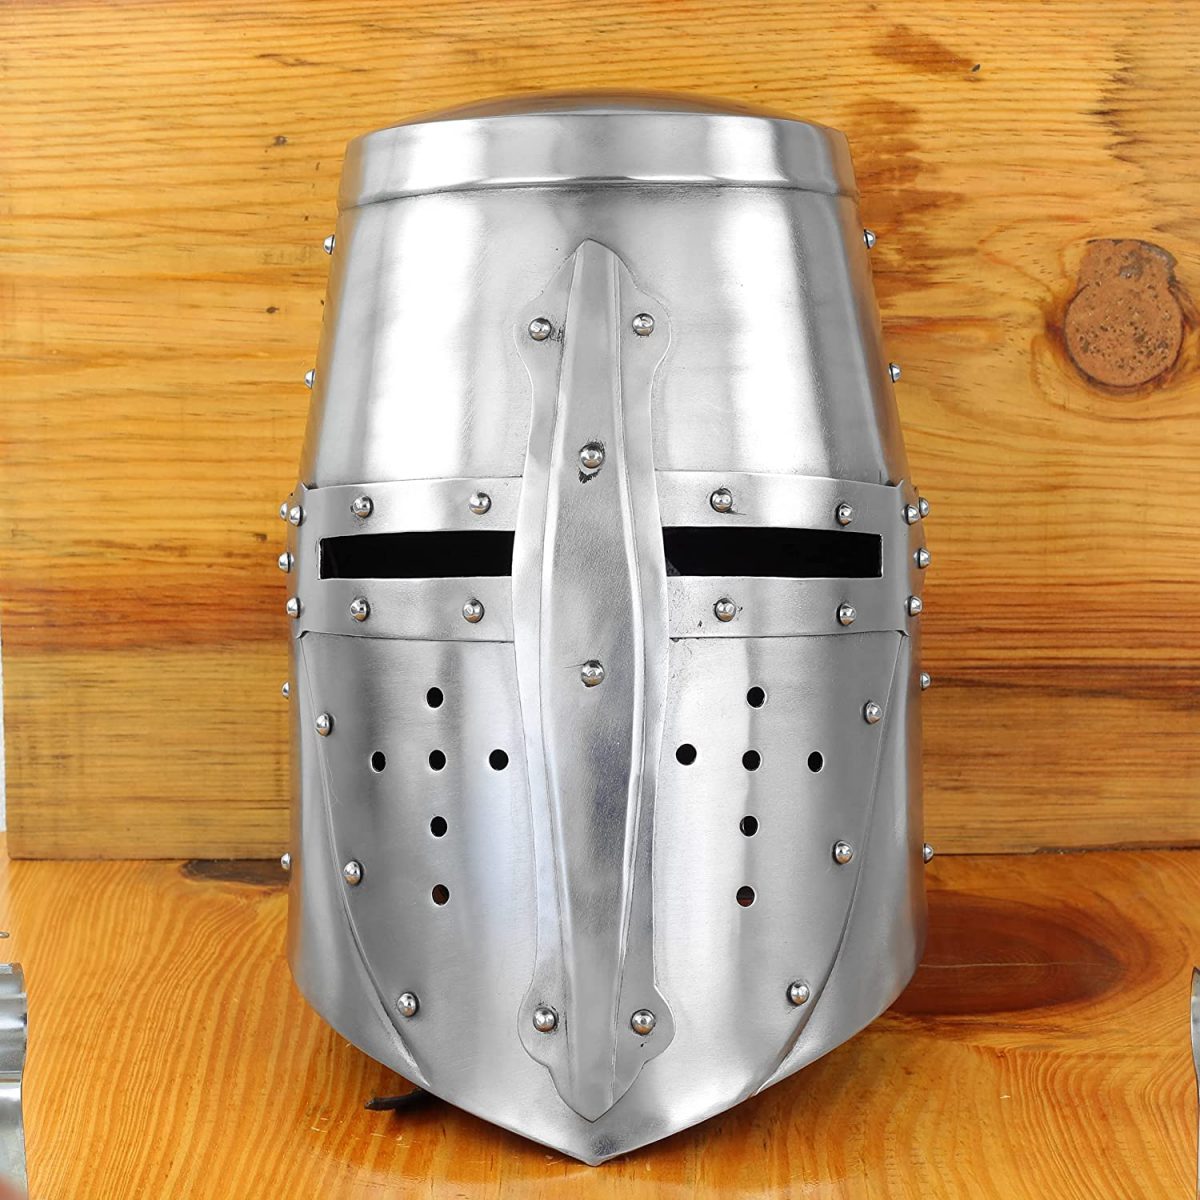 Nagina International Medieval Era Crusader Great Helm Knight Steel Helmet, 6 Hole Patterned Cheeks & Nasal Strip Design, Perfect for LARP & Stage  Theatrical Dramas